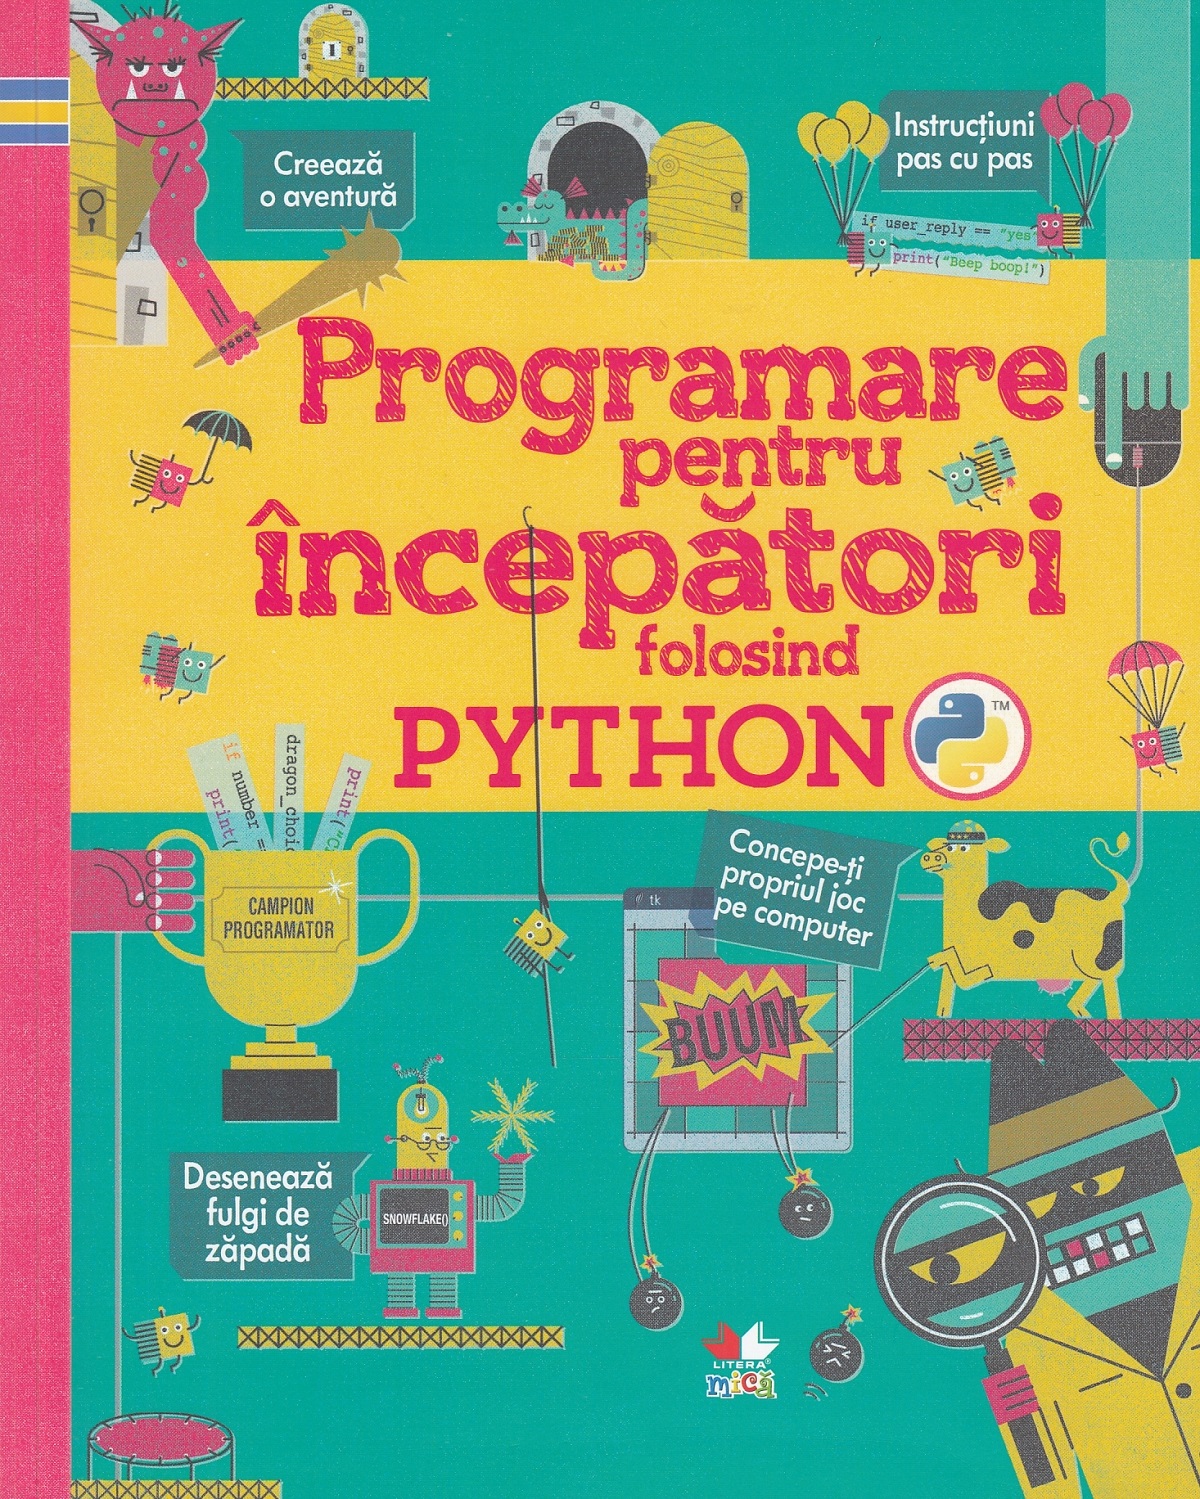 Programare pentru incepatori folosind Python - Rosie Dickins, Louie Stowell